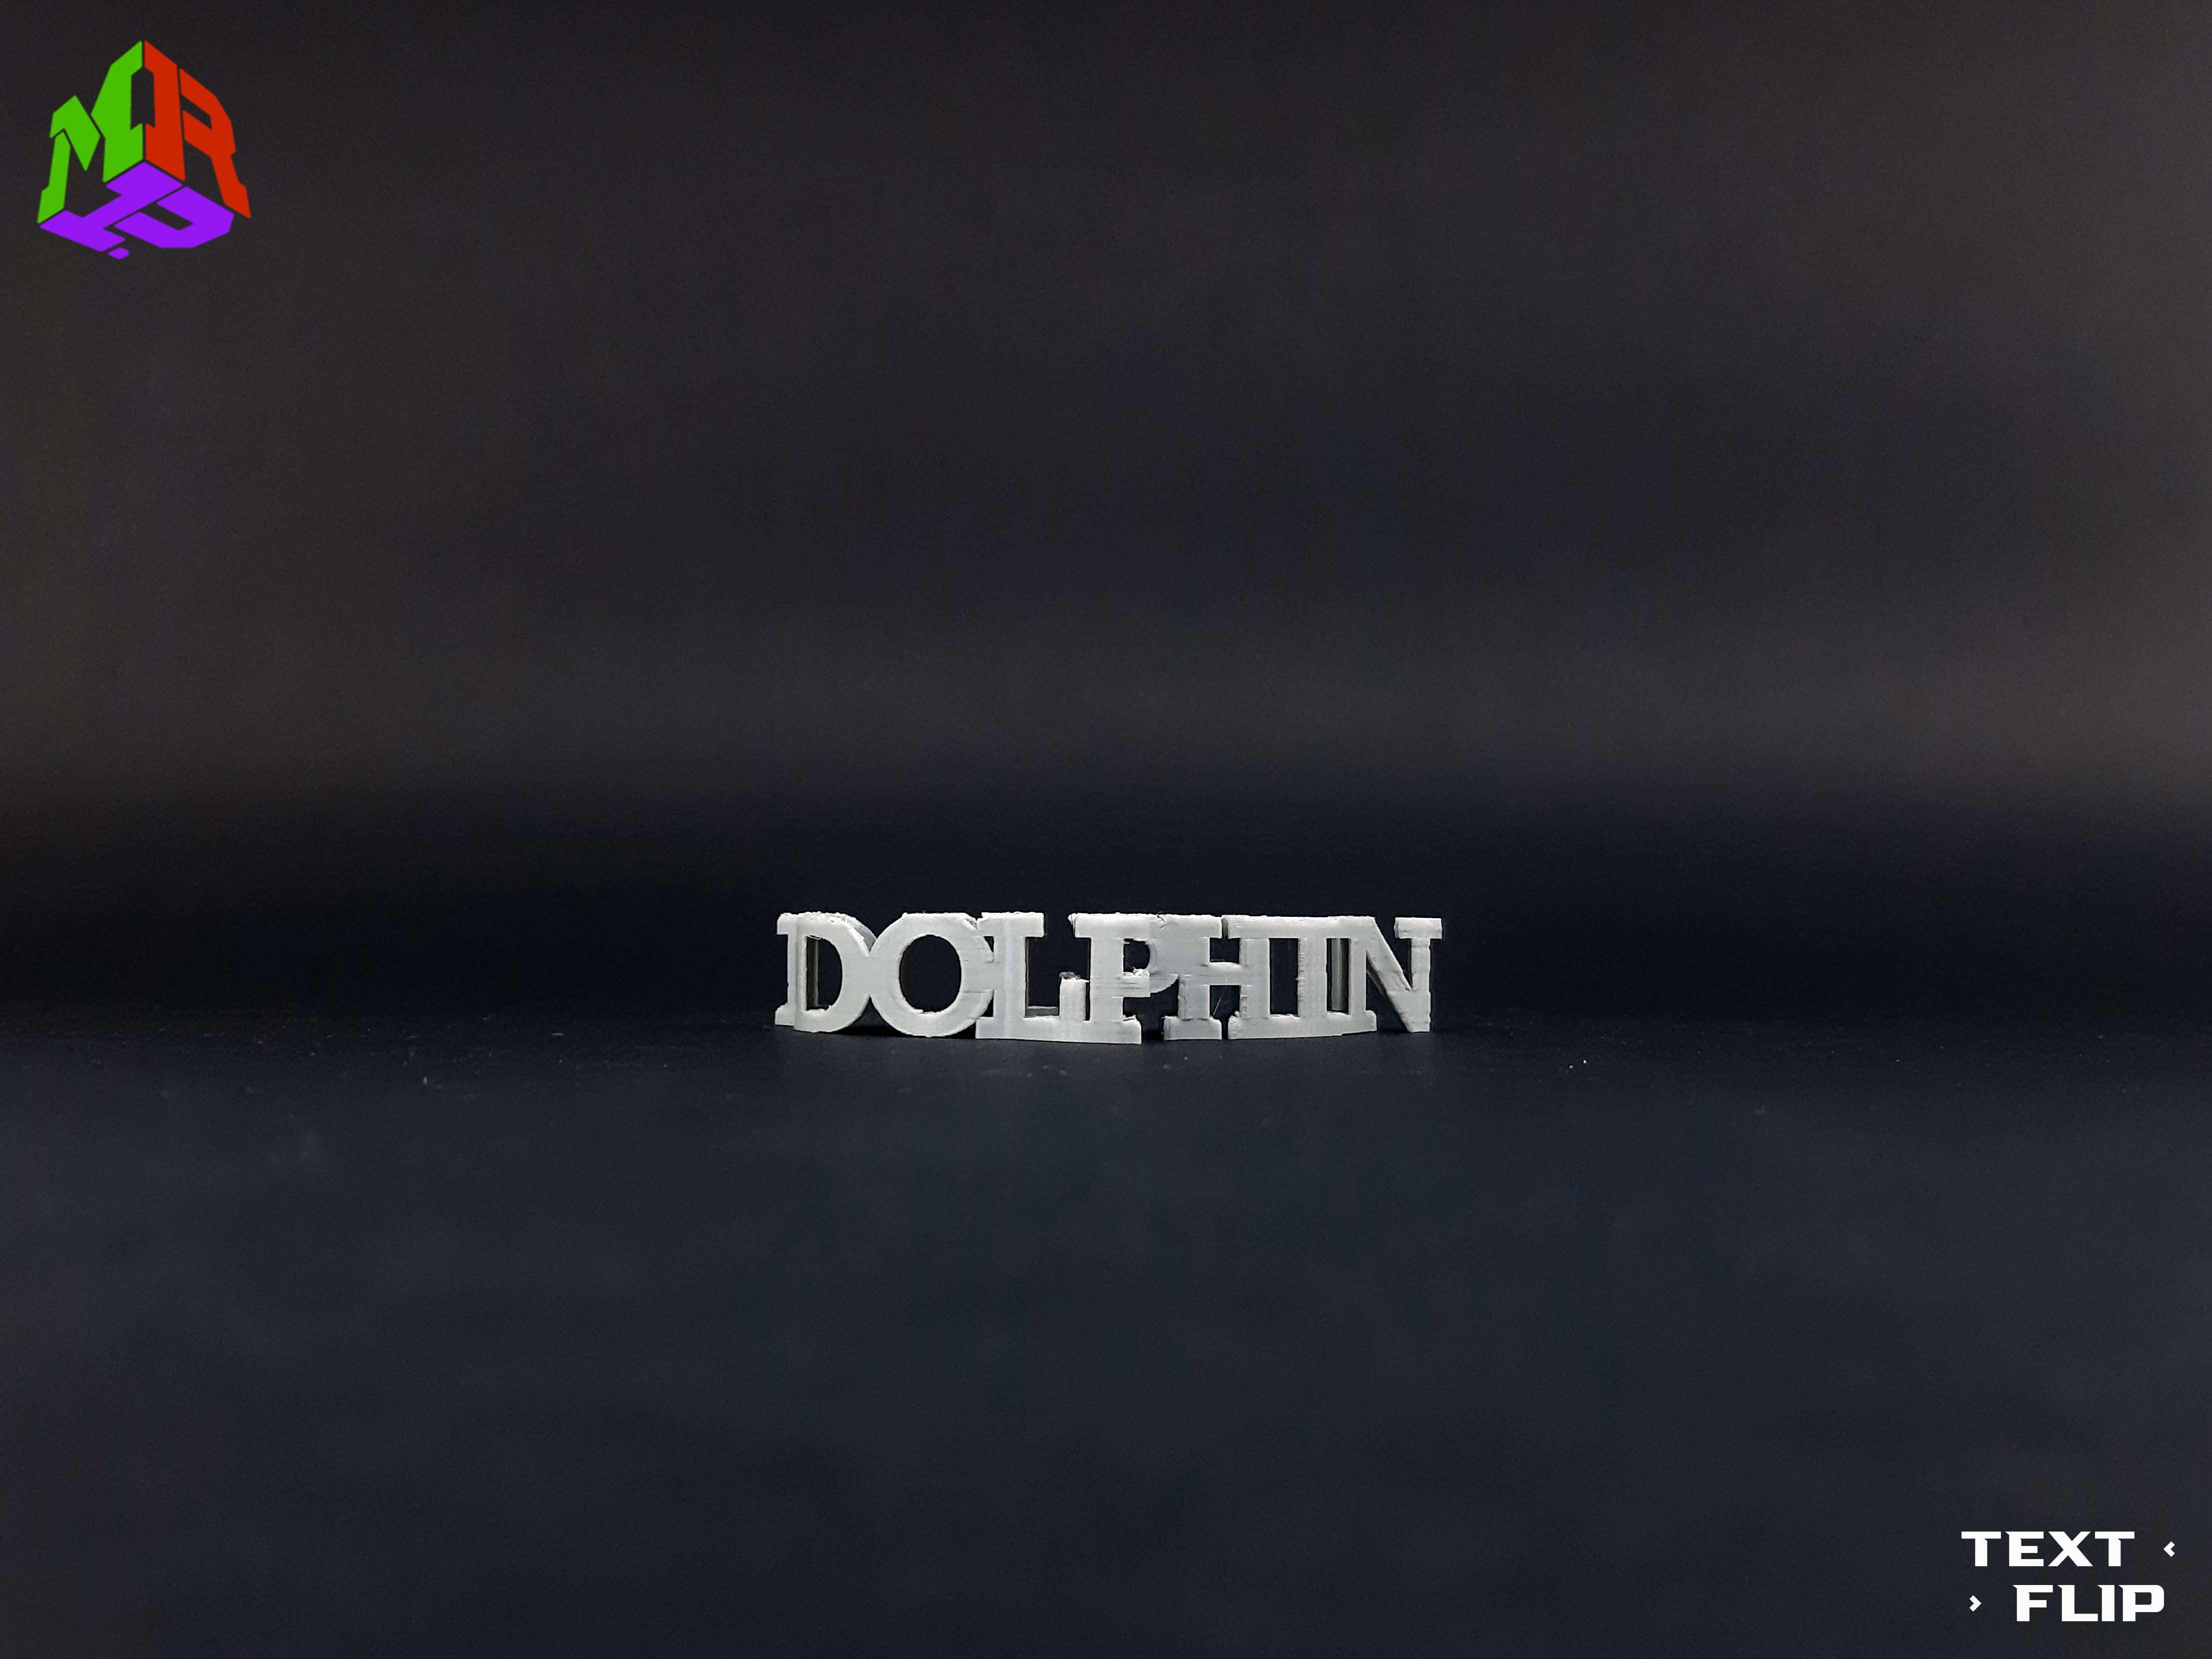 Text Flip - Dolphin